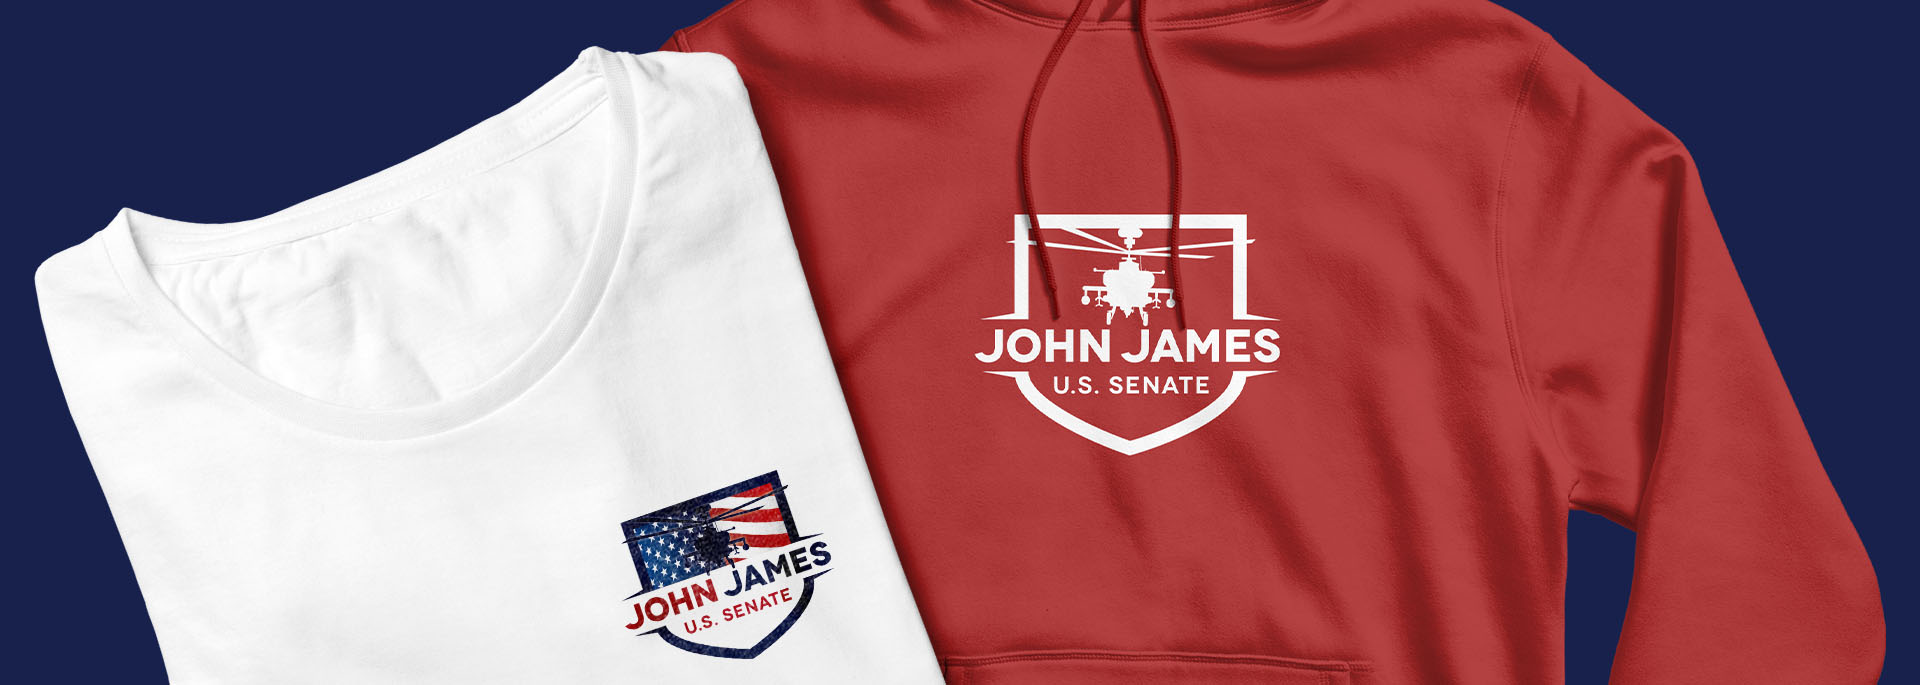 John James Online Fundraising Merchandise